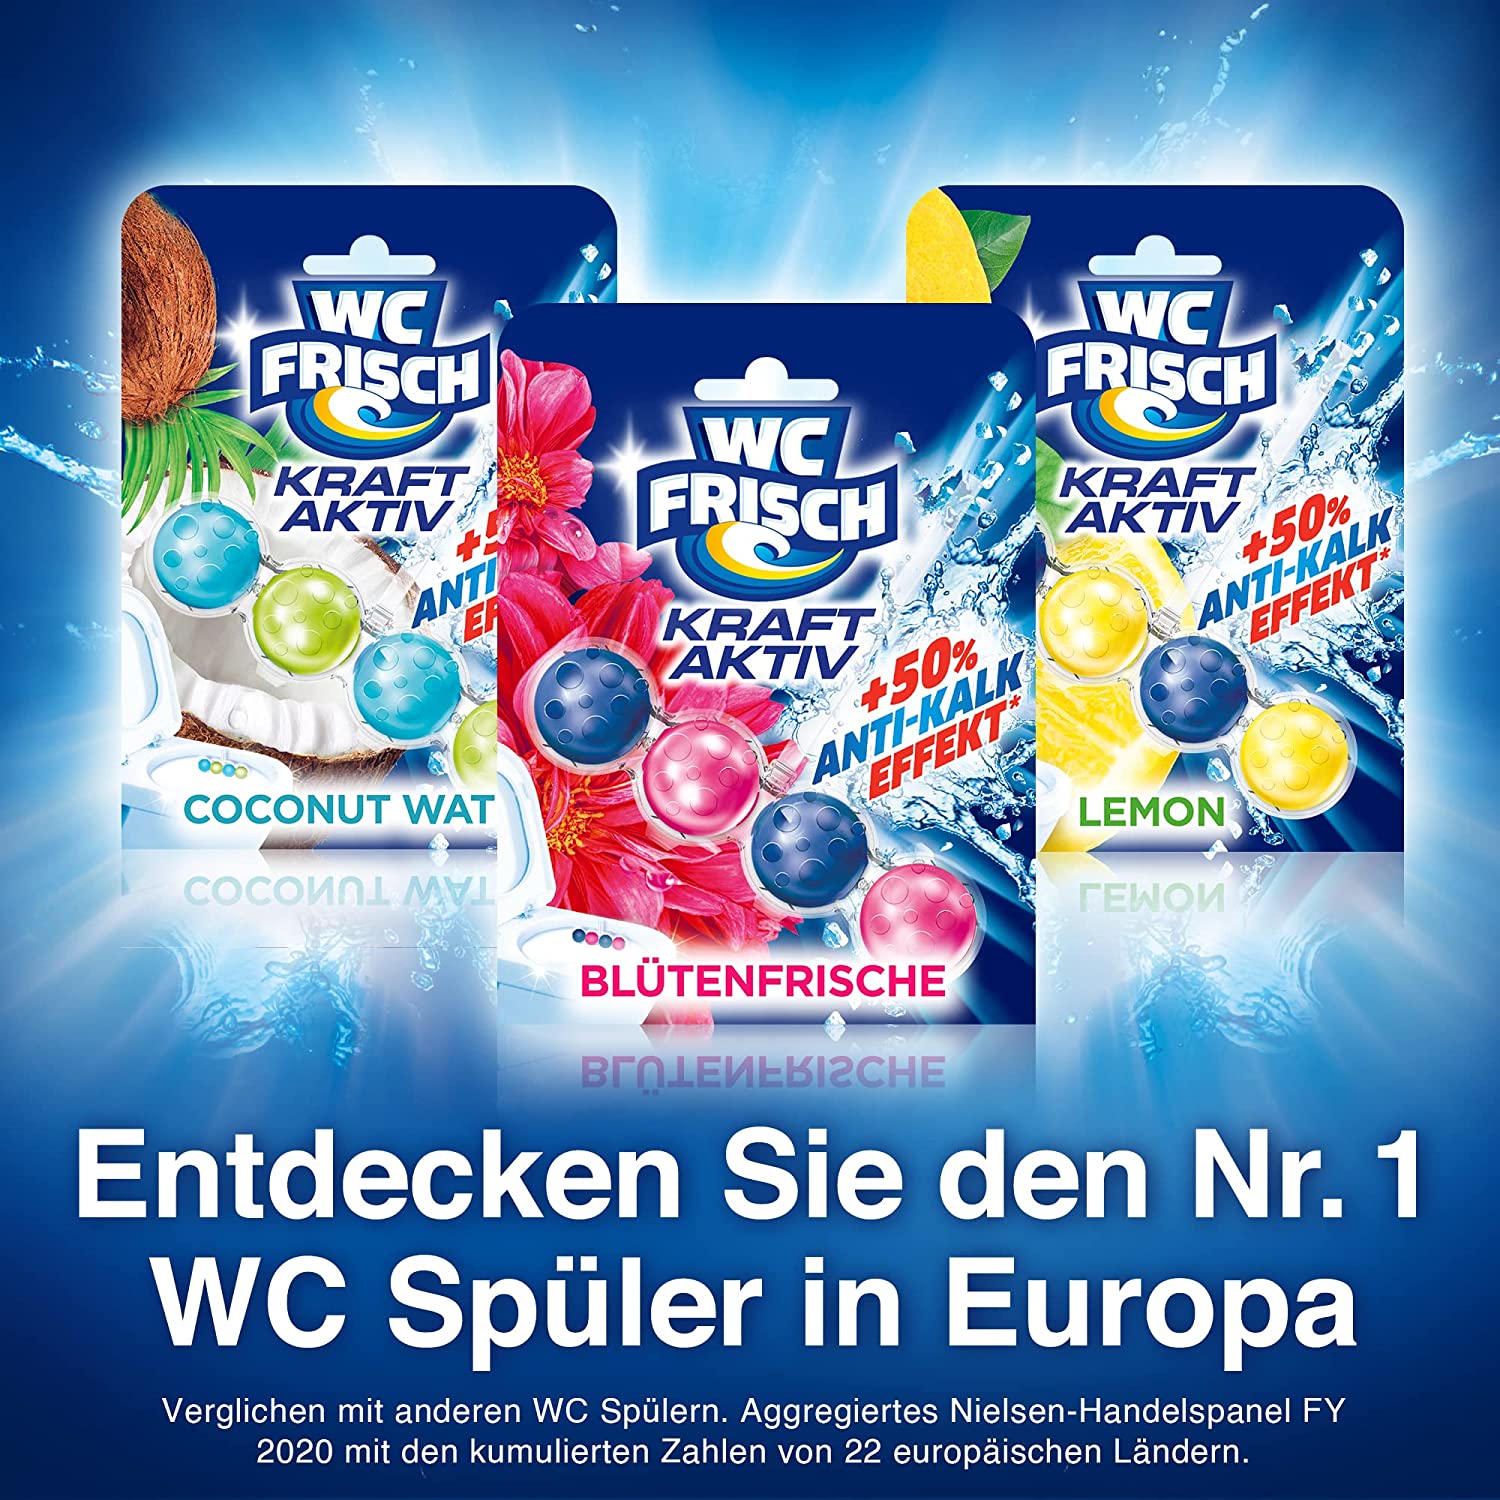 🚽 WC FRISCH Kraft Aktiv Duftspüler 3er Pack nur 2,95€ (statt 3,69